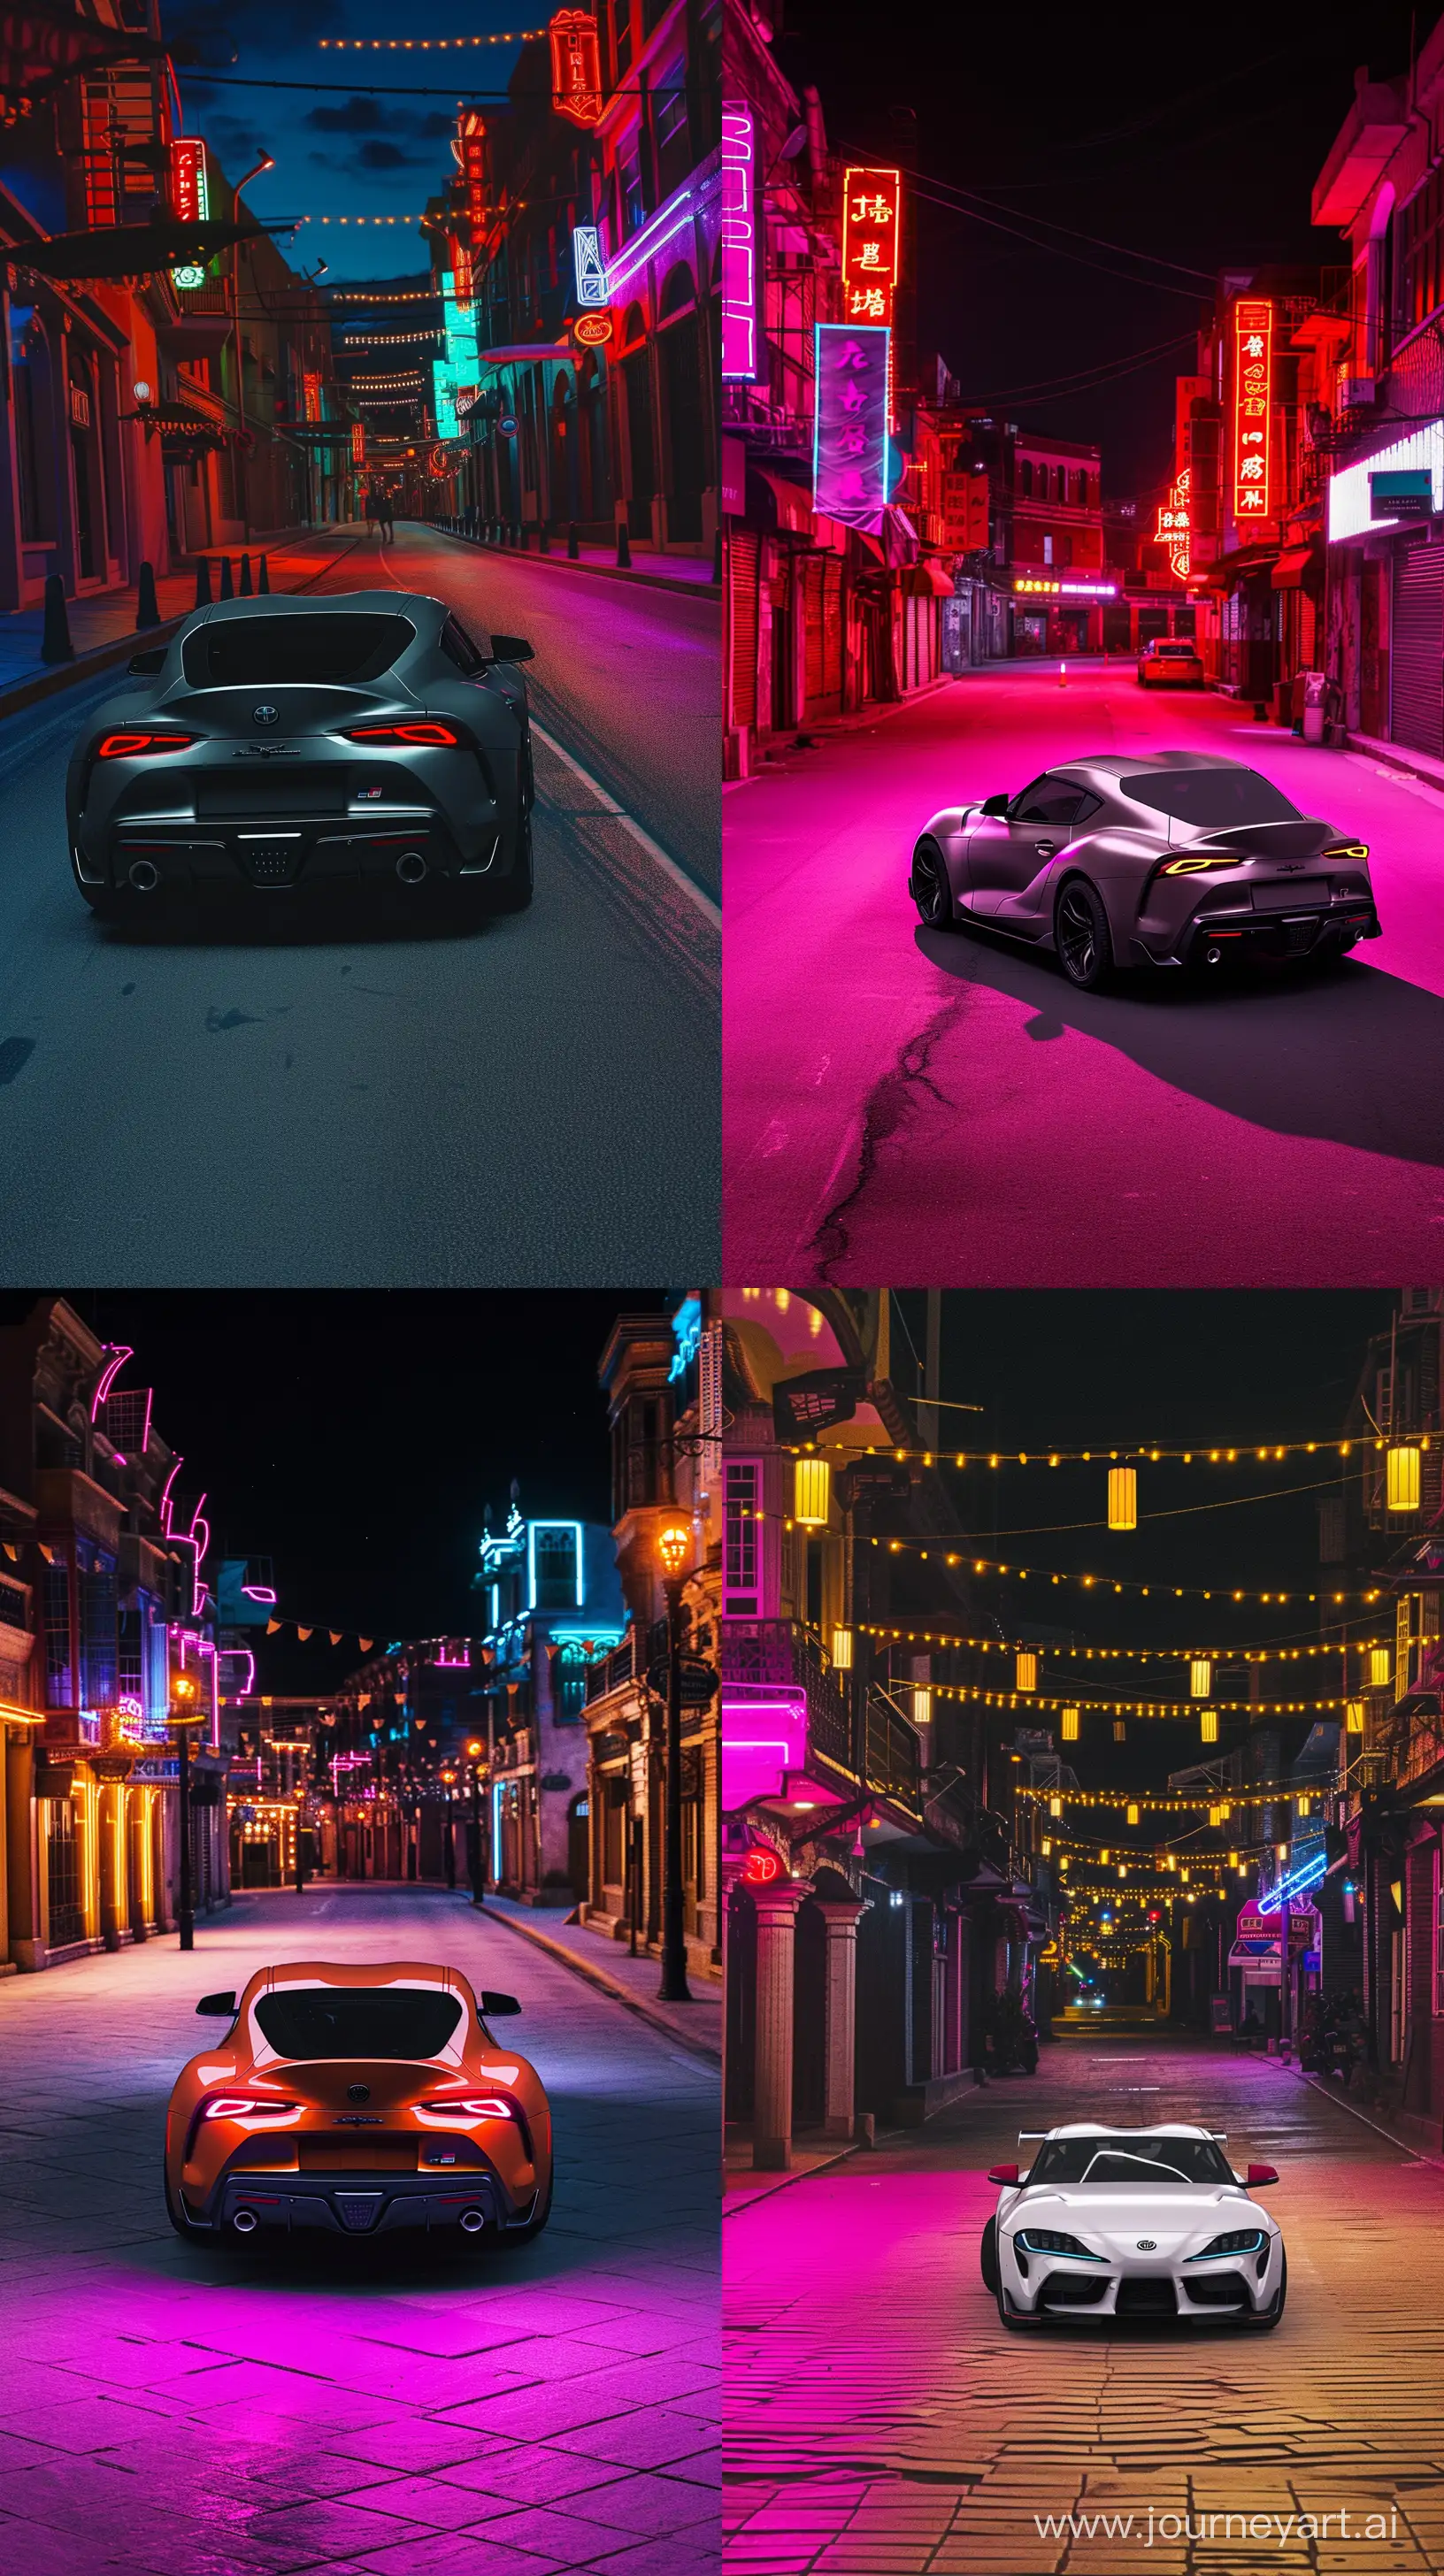 Sleek-Supra-MK4-Car-on-NeonLit-Empty-Night-Street